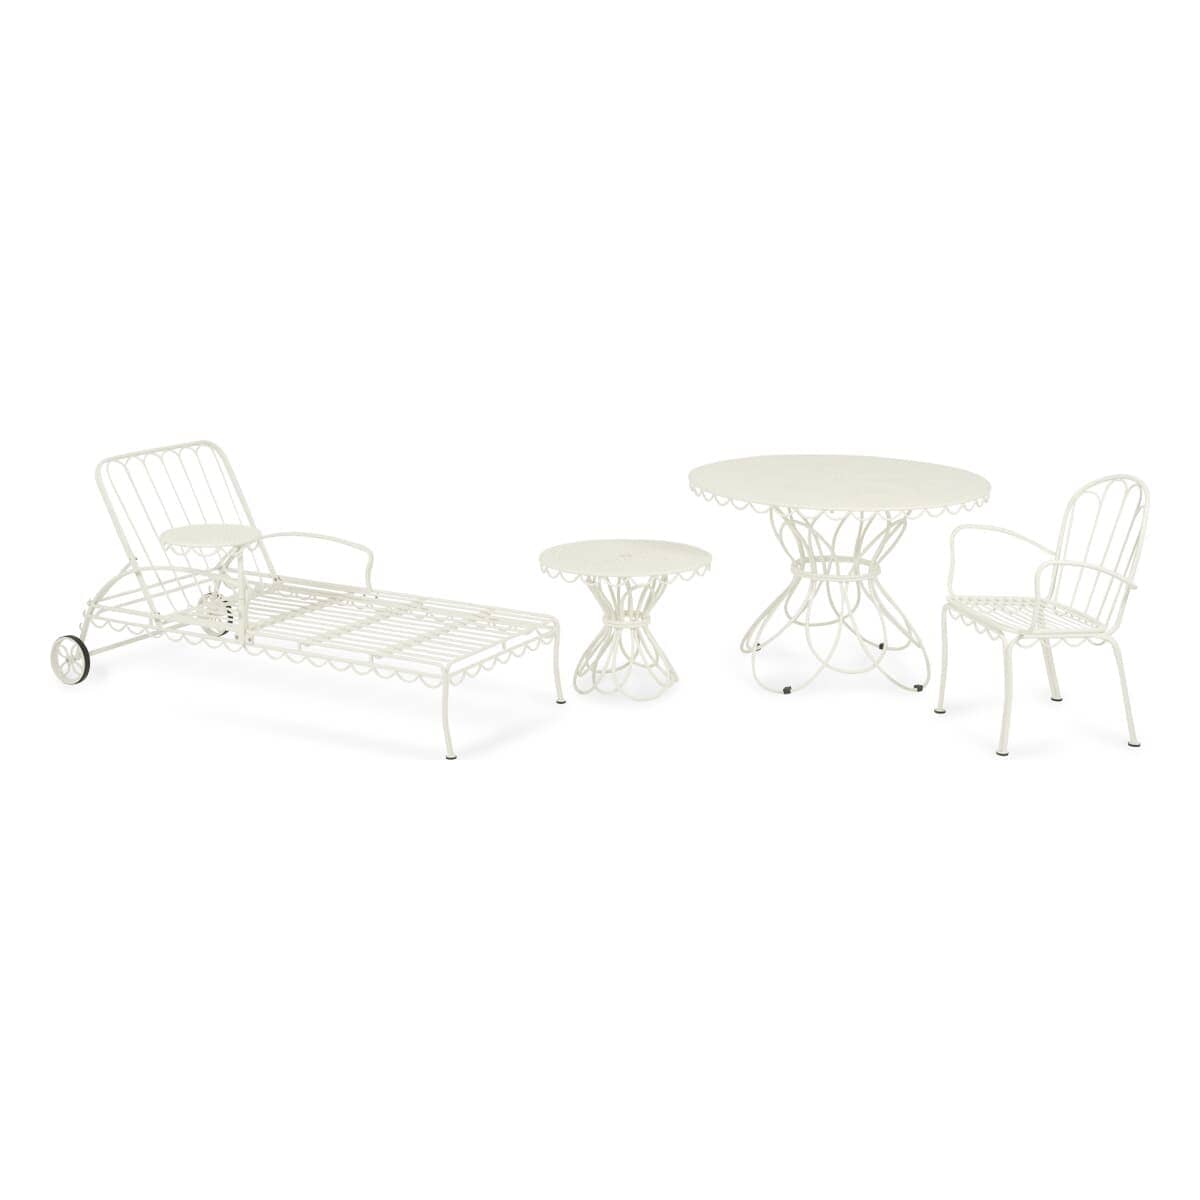 four different outdoor Al Fresco furniture piece in white metal